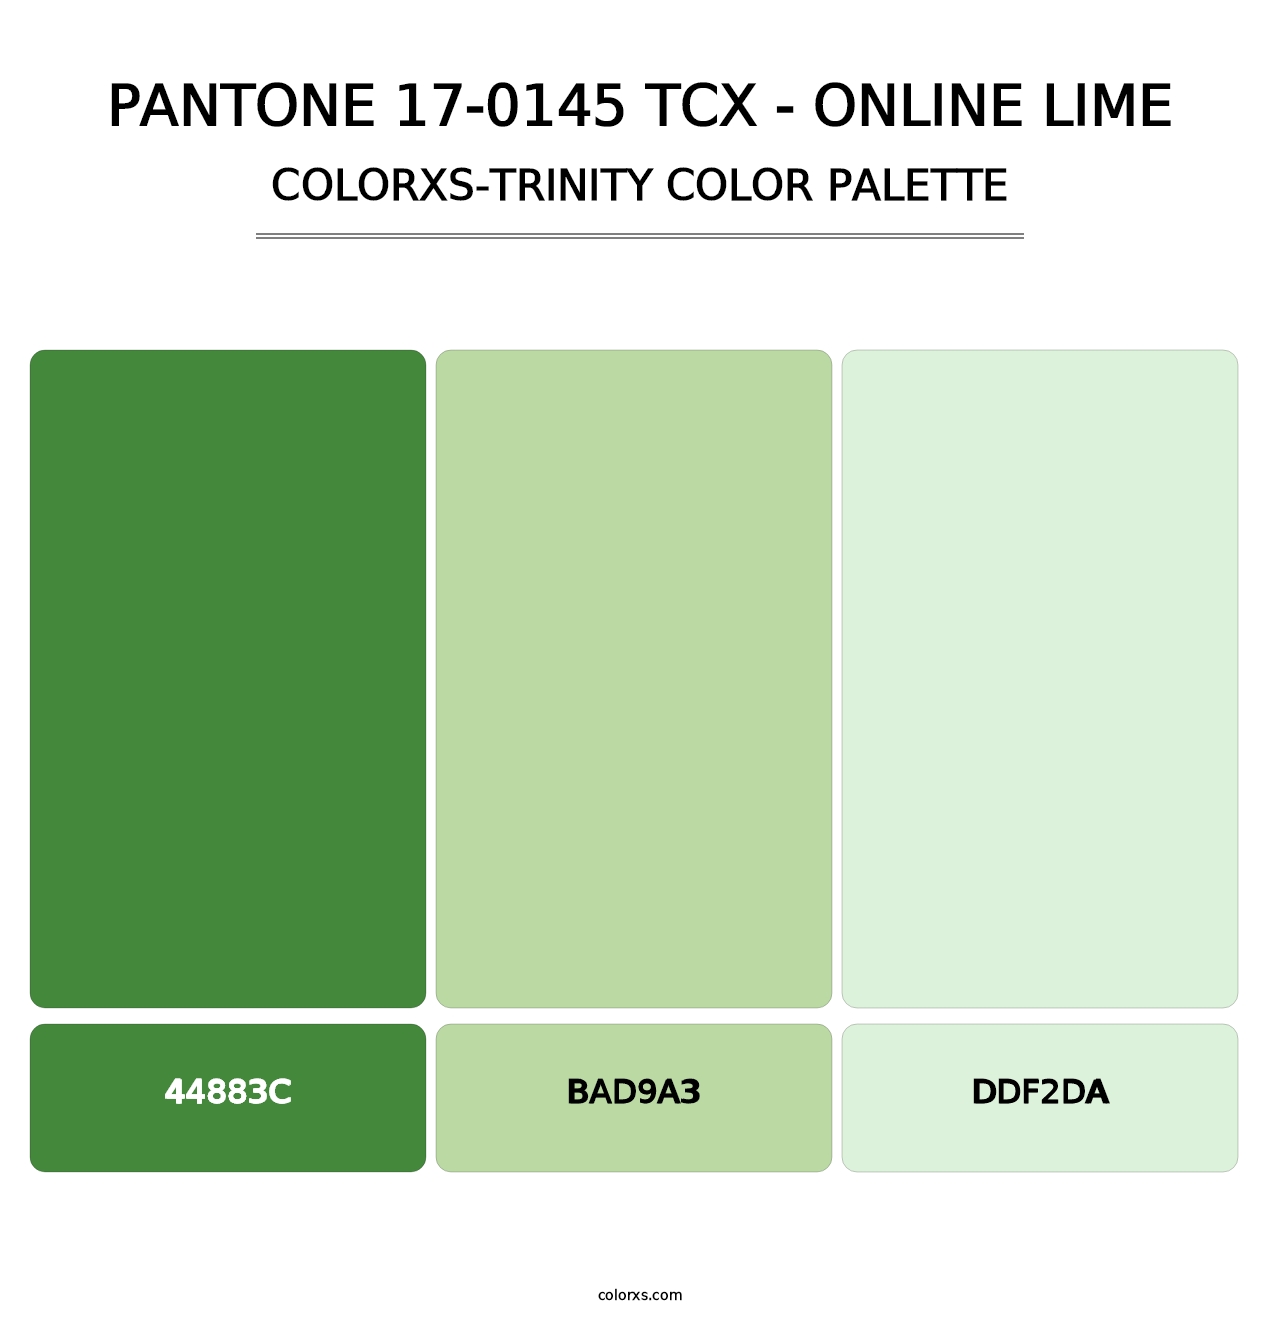 PANTONE 17-0145 TCX - Online Lime - Colorxs Trinity Palette